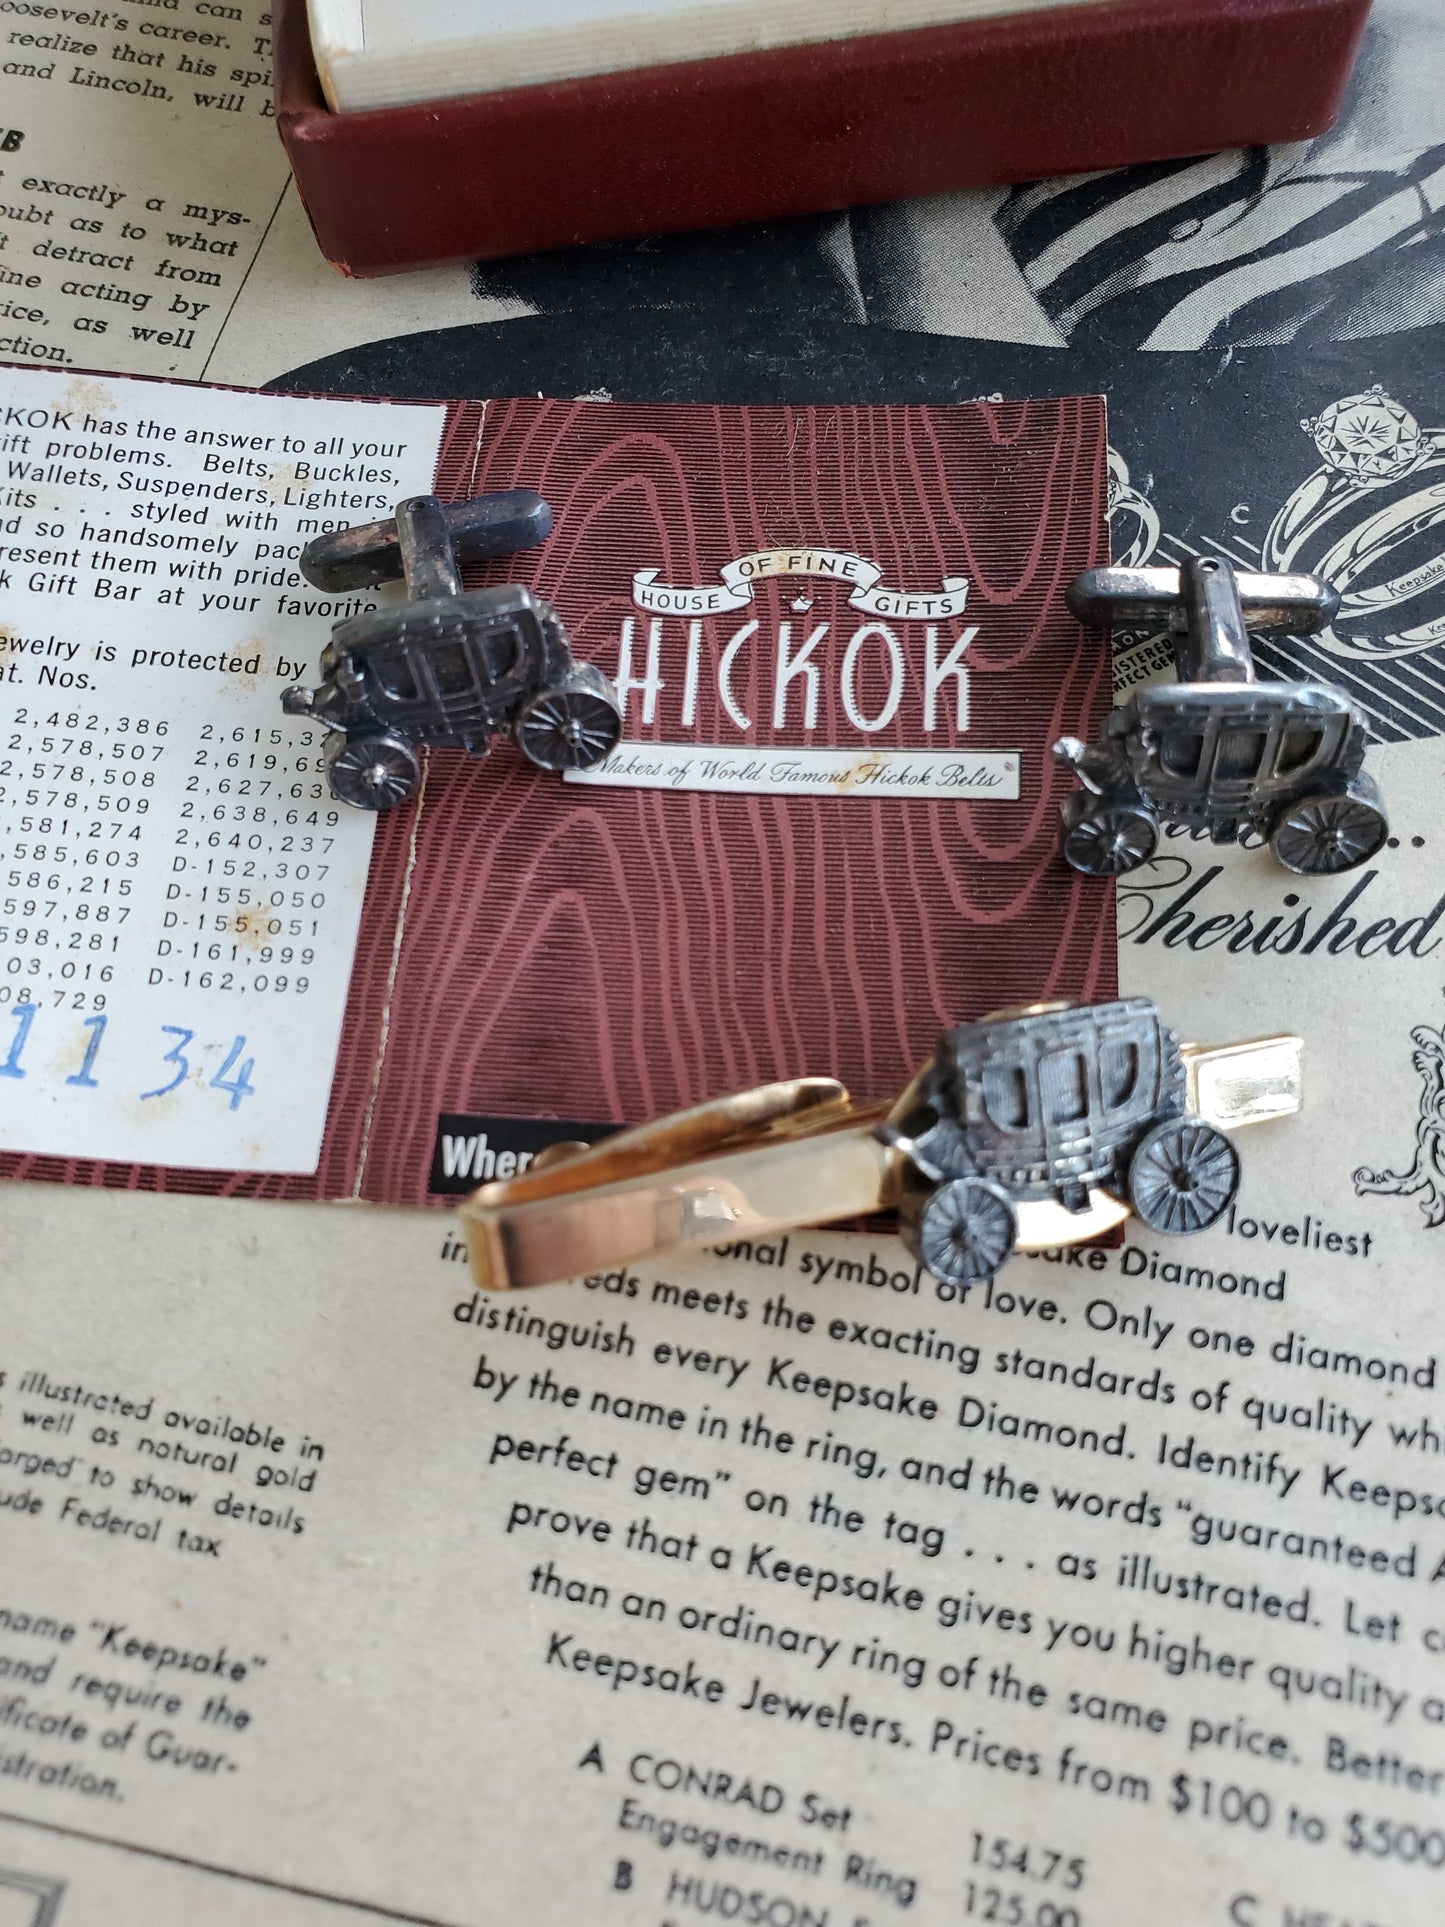 Vintage Hickok De Luxe Wells Fargo stagecoach cowboy cufflinks and tie clip in box collectible